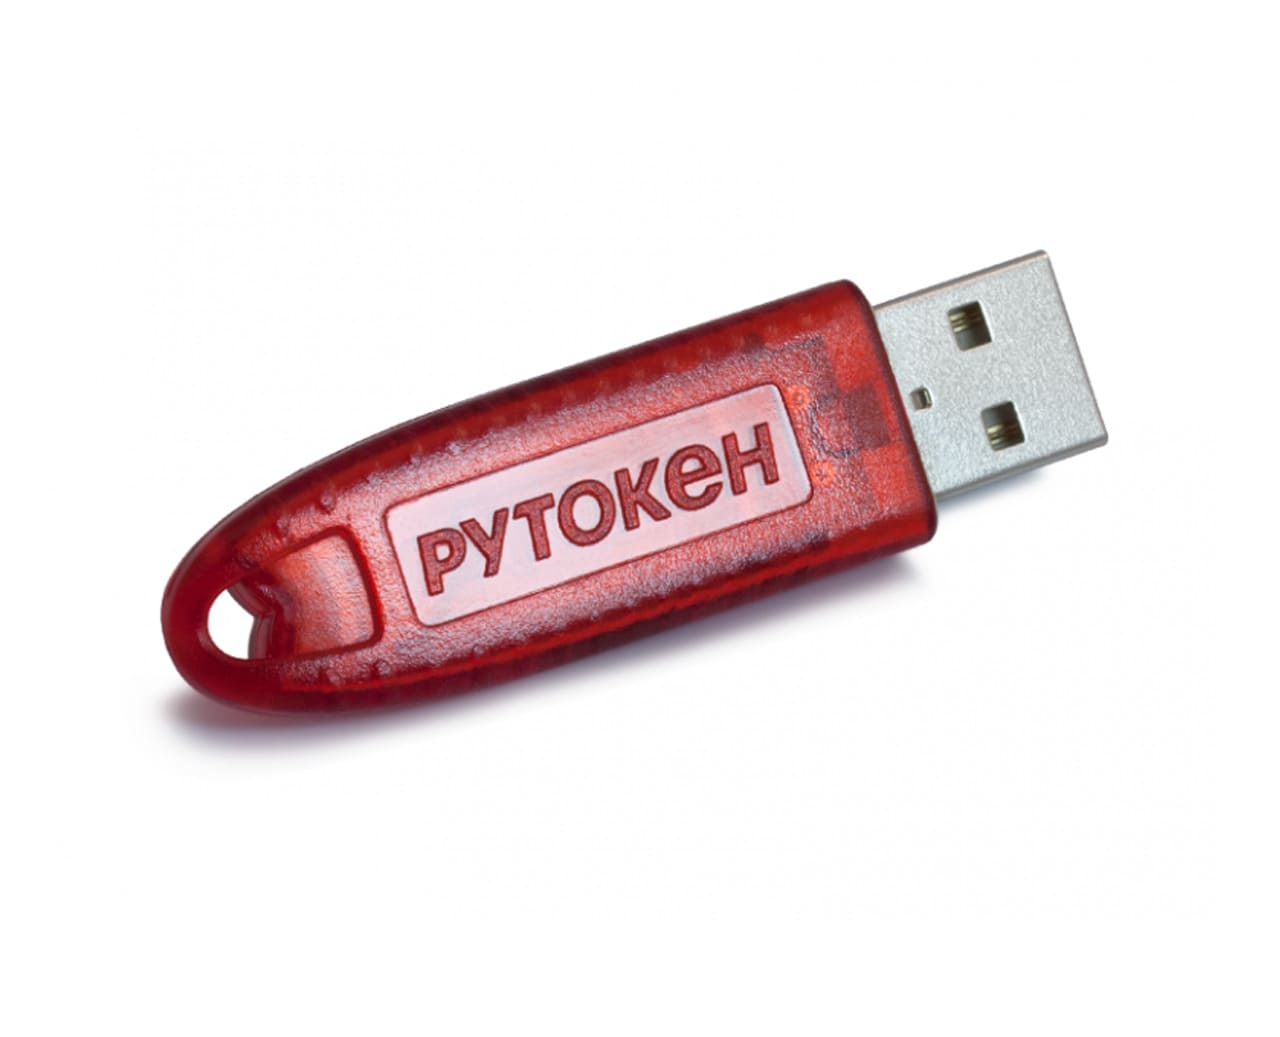 Https rutoken ru support download. Рутокен Lite 64кб. Пак Rutoken s 64кб. USB-токен Рутокен Lite 64кб Lite-64. Рутокен Lite 64 КБ Astral.